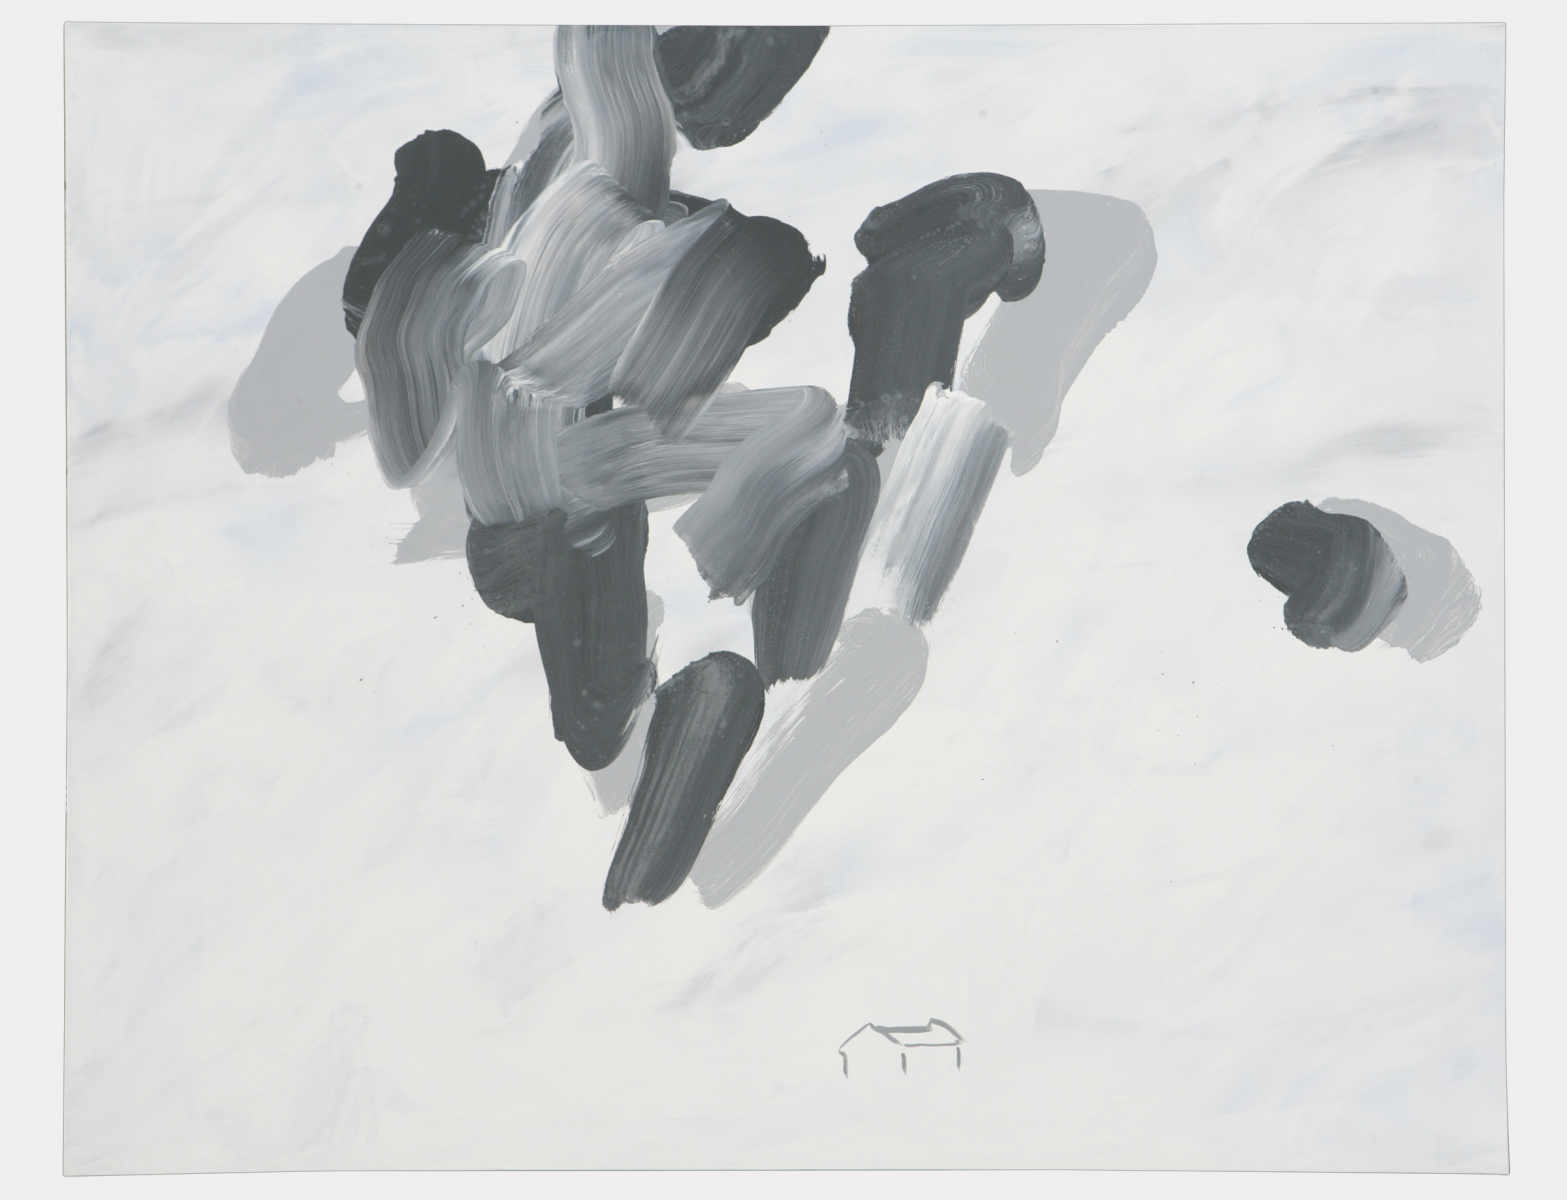 Emptiness-13148, 2013, Acrylic on Canvas, 181.8x227.3cm
